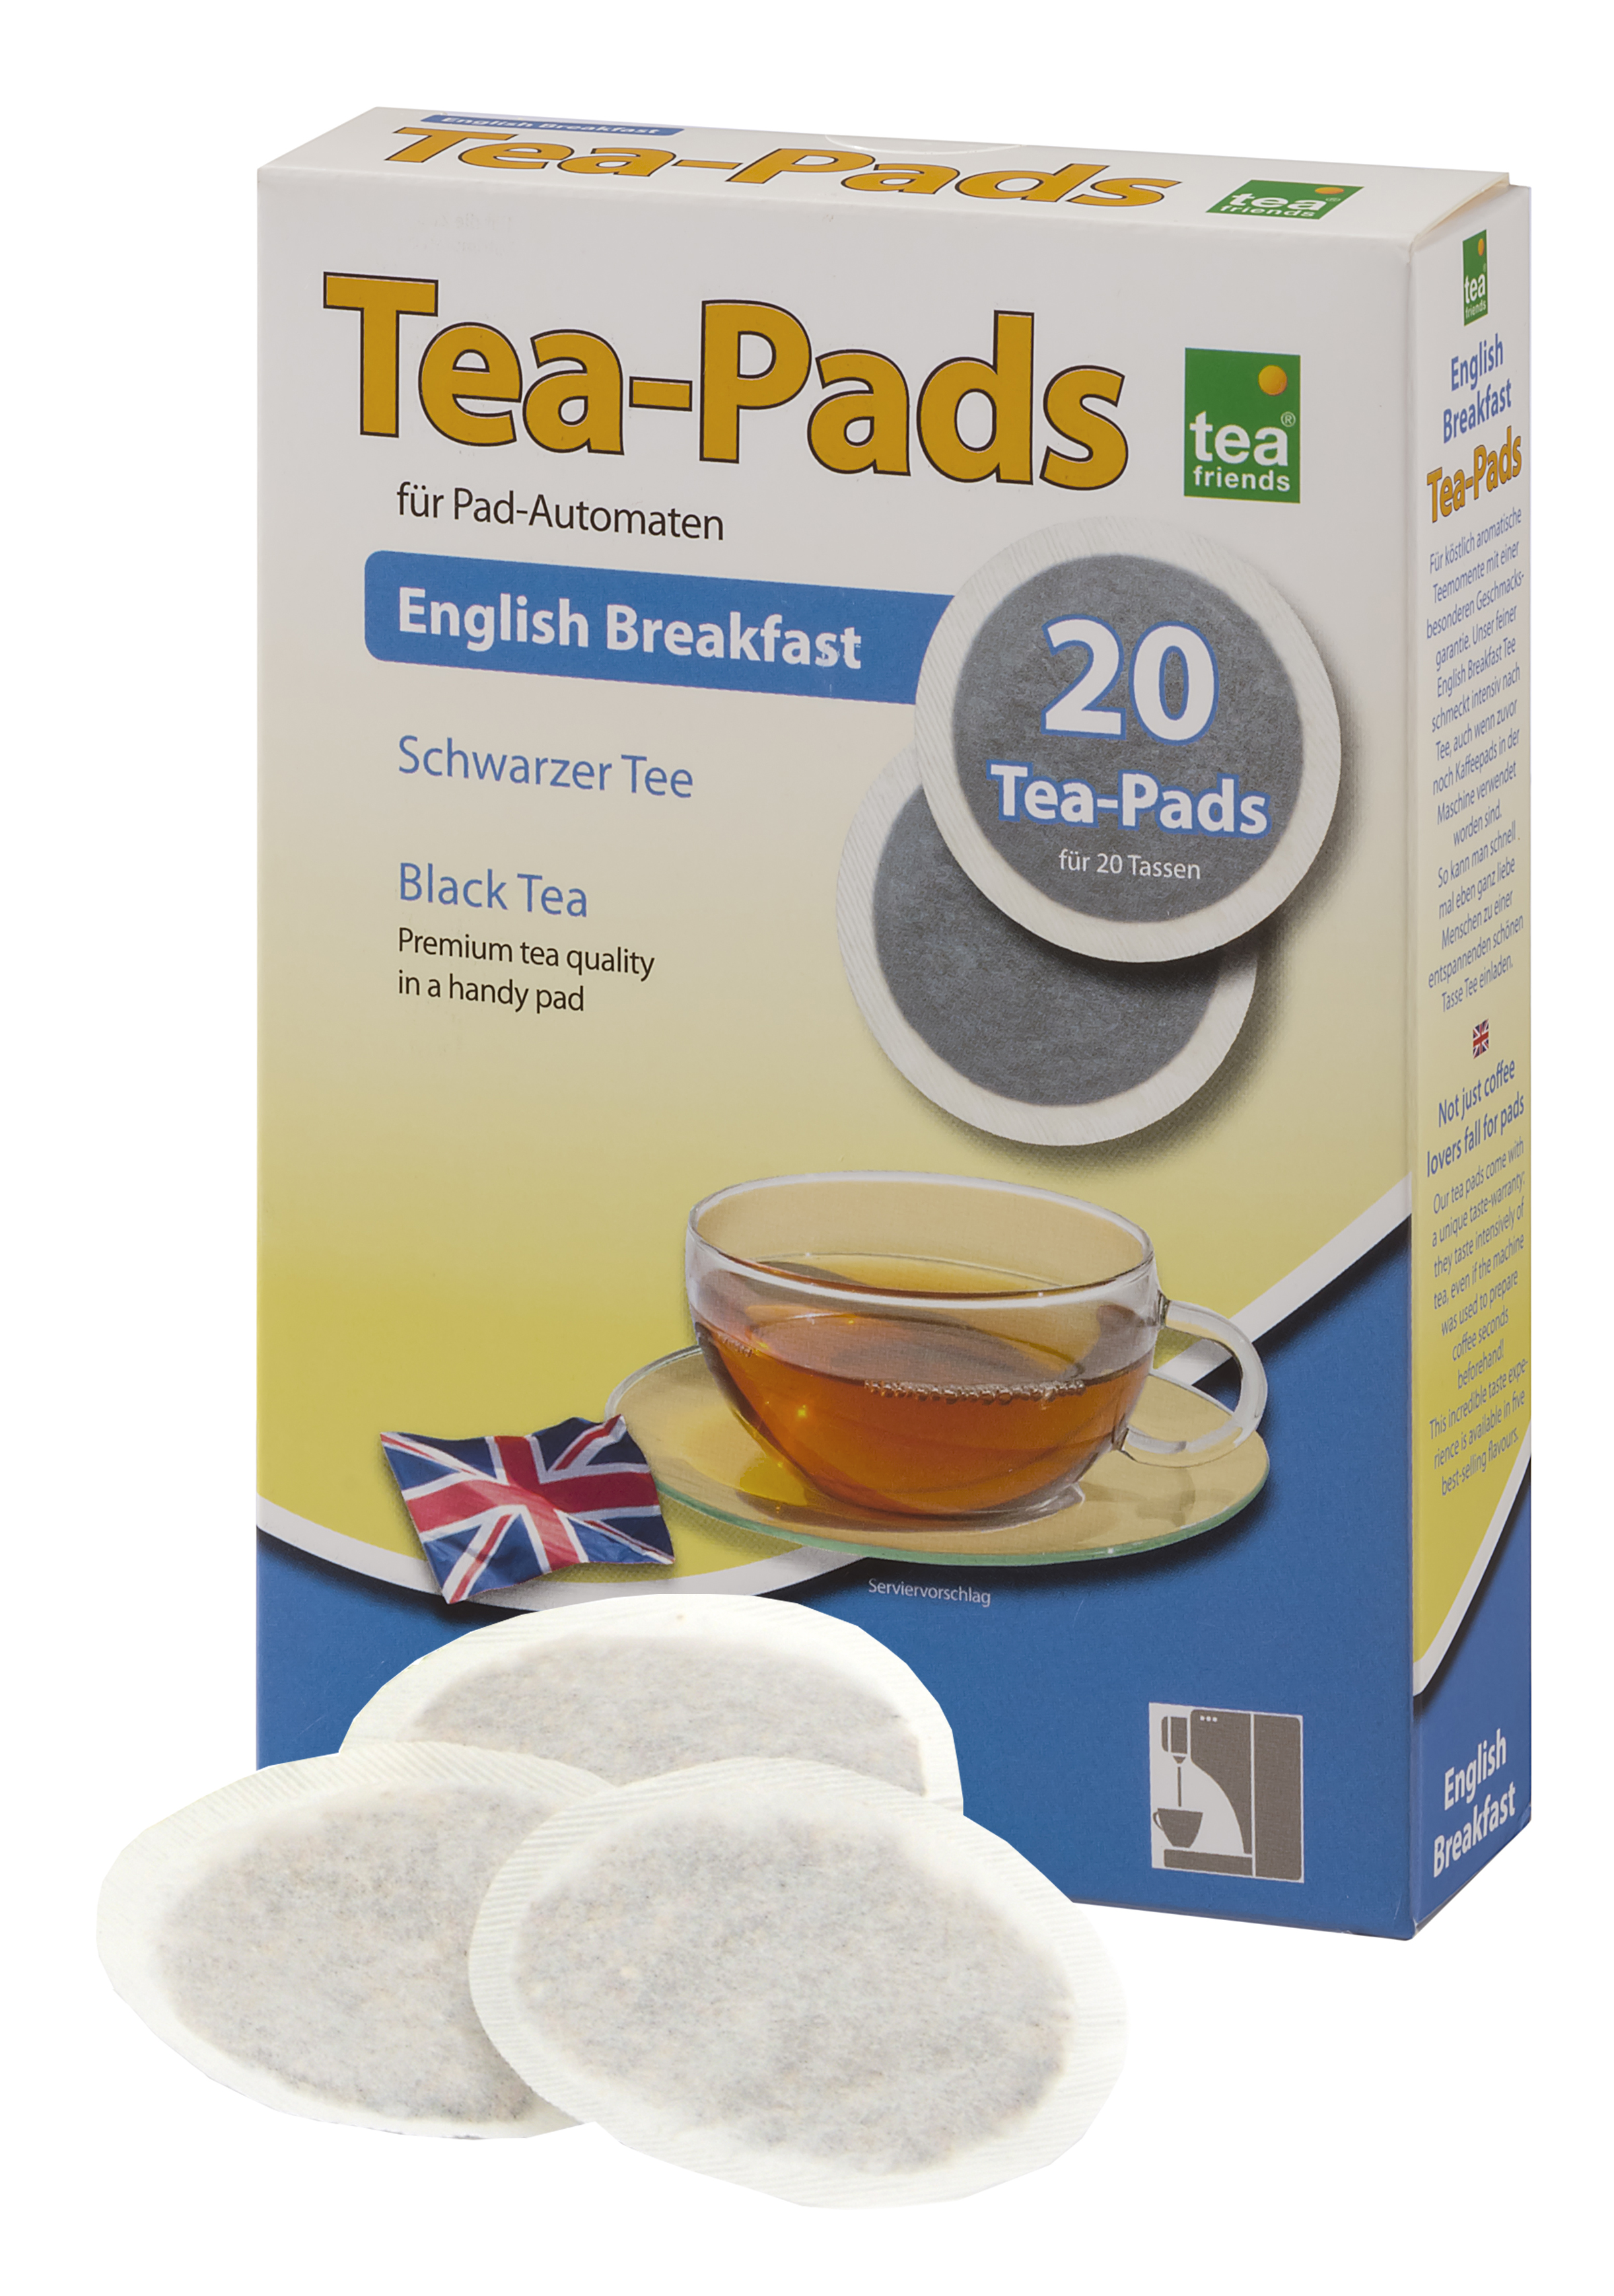 Tea Pads "English Breakfast" schwarzer Tee	